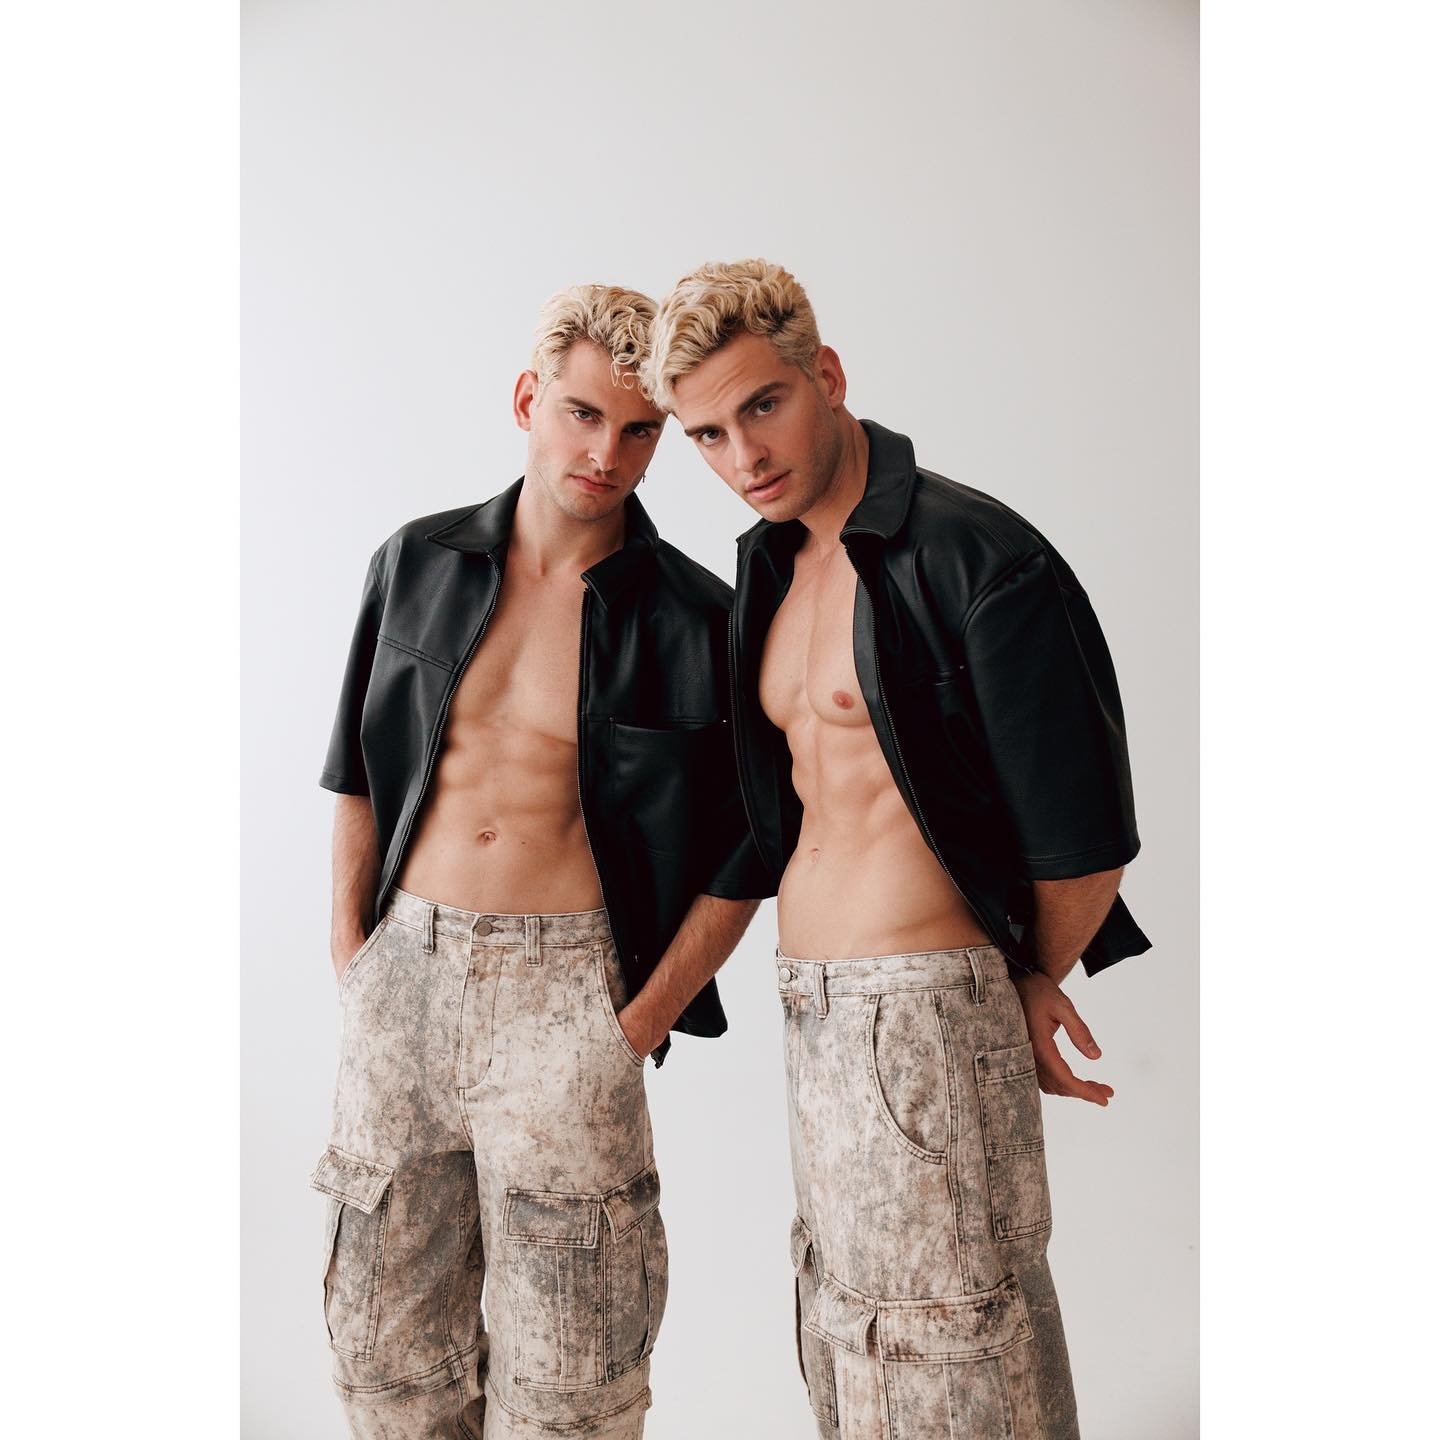 GNTM Twins Julian &amp; Luca ✨

Models @julianandluka 
Photographer @elenibogatini 
Styling by me @gergana_reinhold_styling 

#twins #zwillinge #doubletrouble #menswear #gntm #manstyle #manfashion #streetfashion #highstreetfashion 
#fotoshooting #set